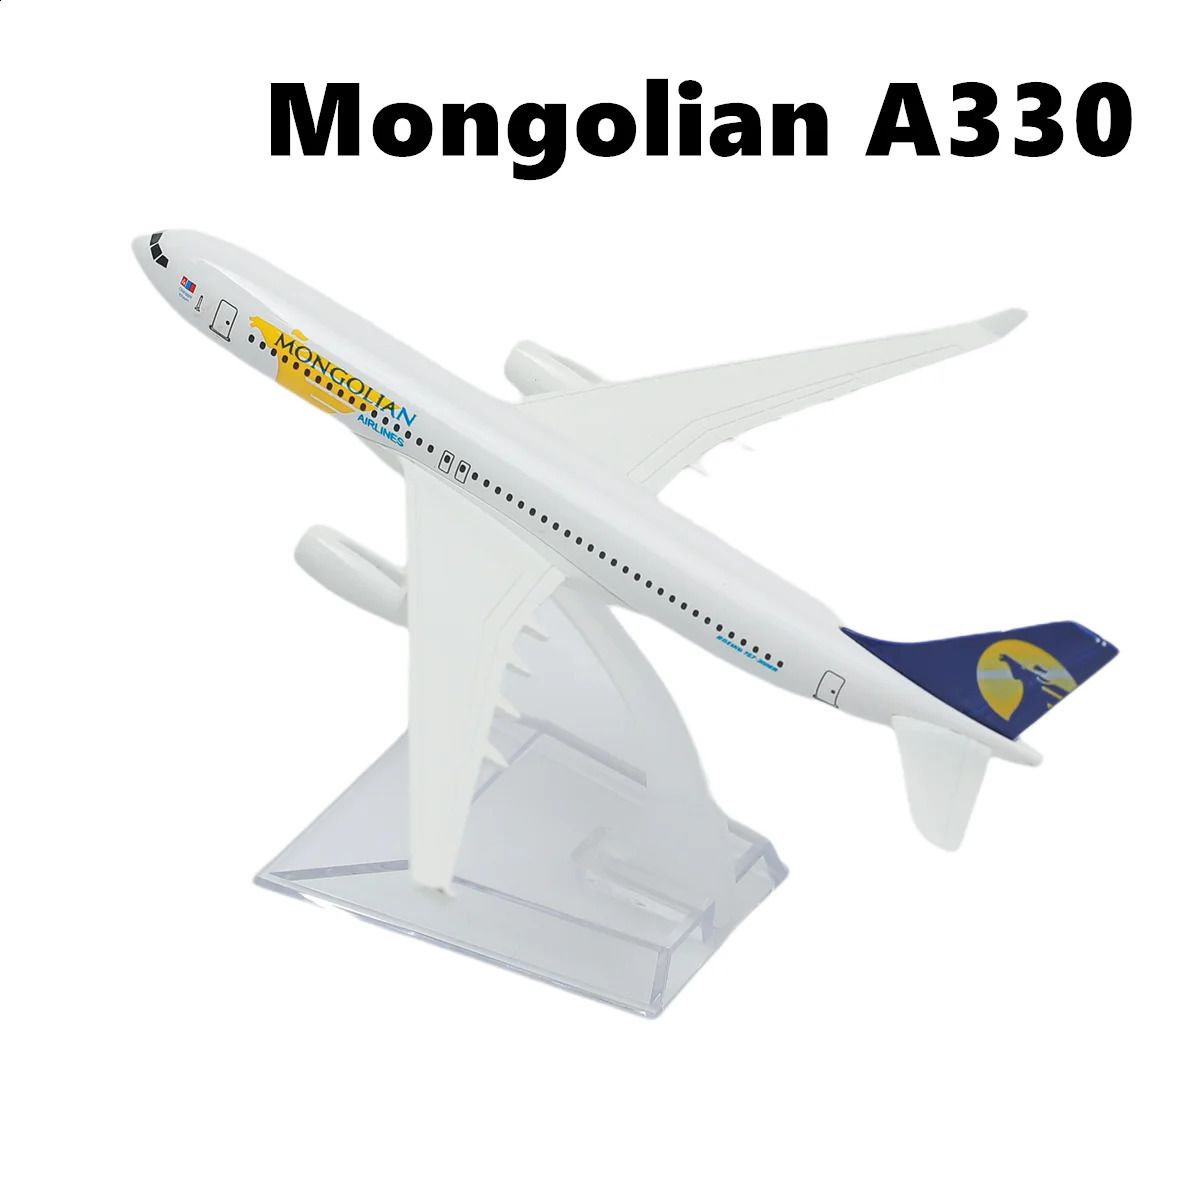 34. Mongolia A330